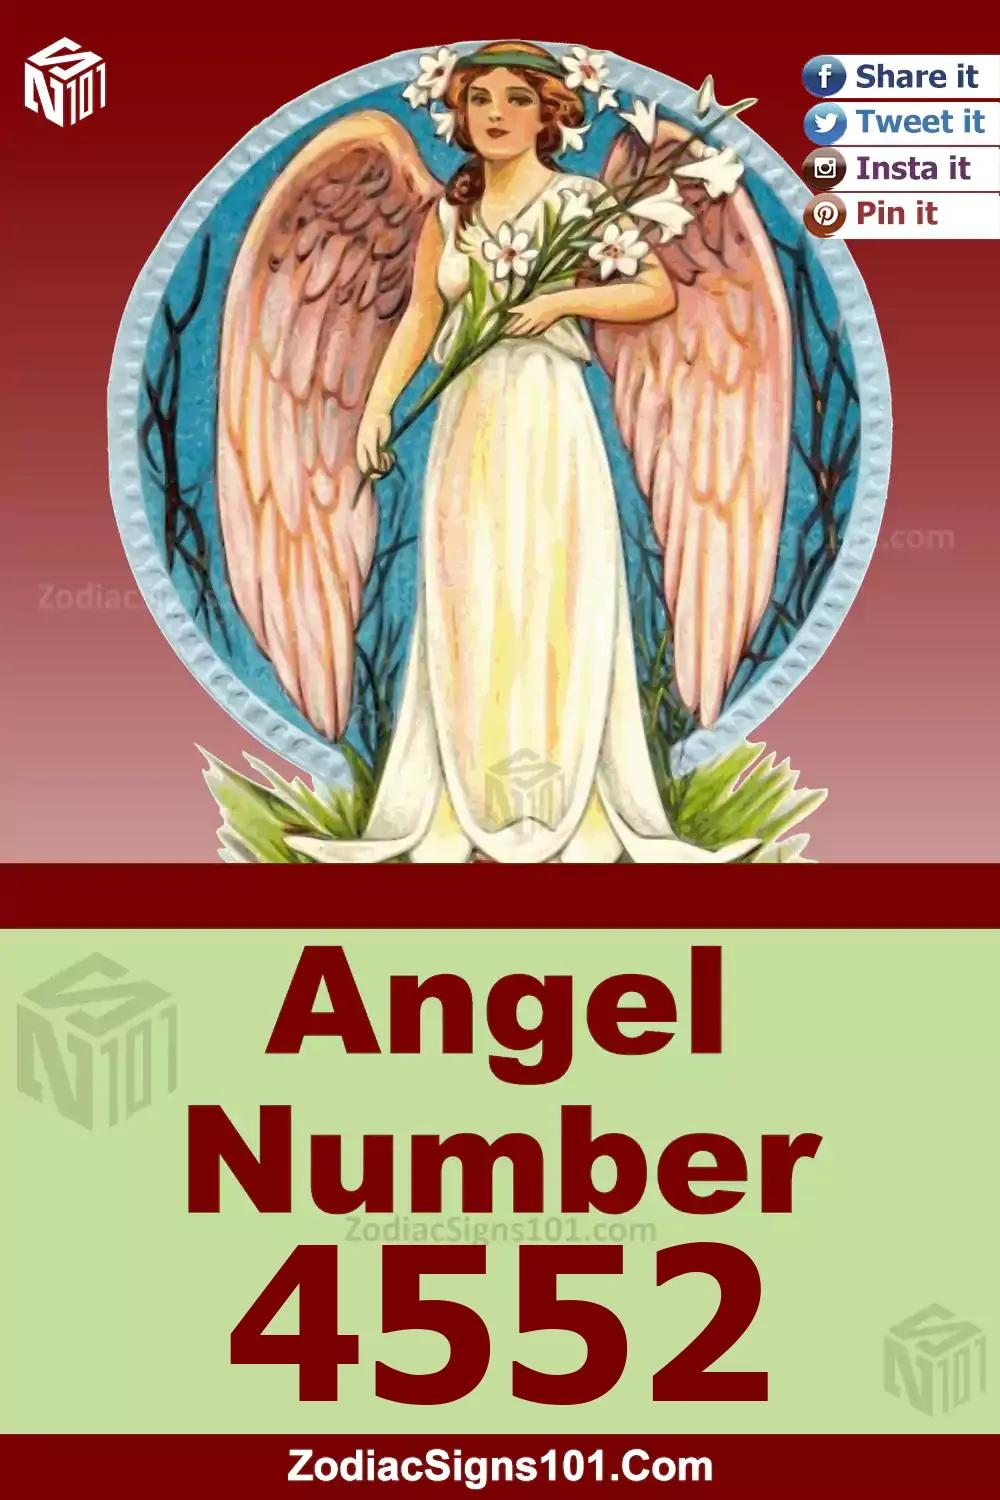 4552-Angel-Number-Meaning.jpg